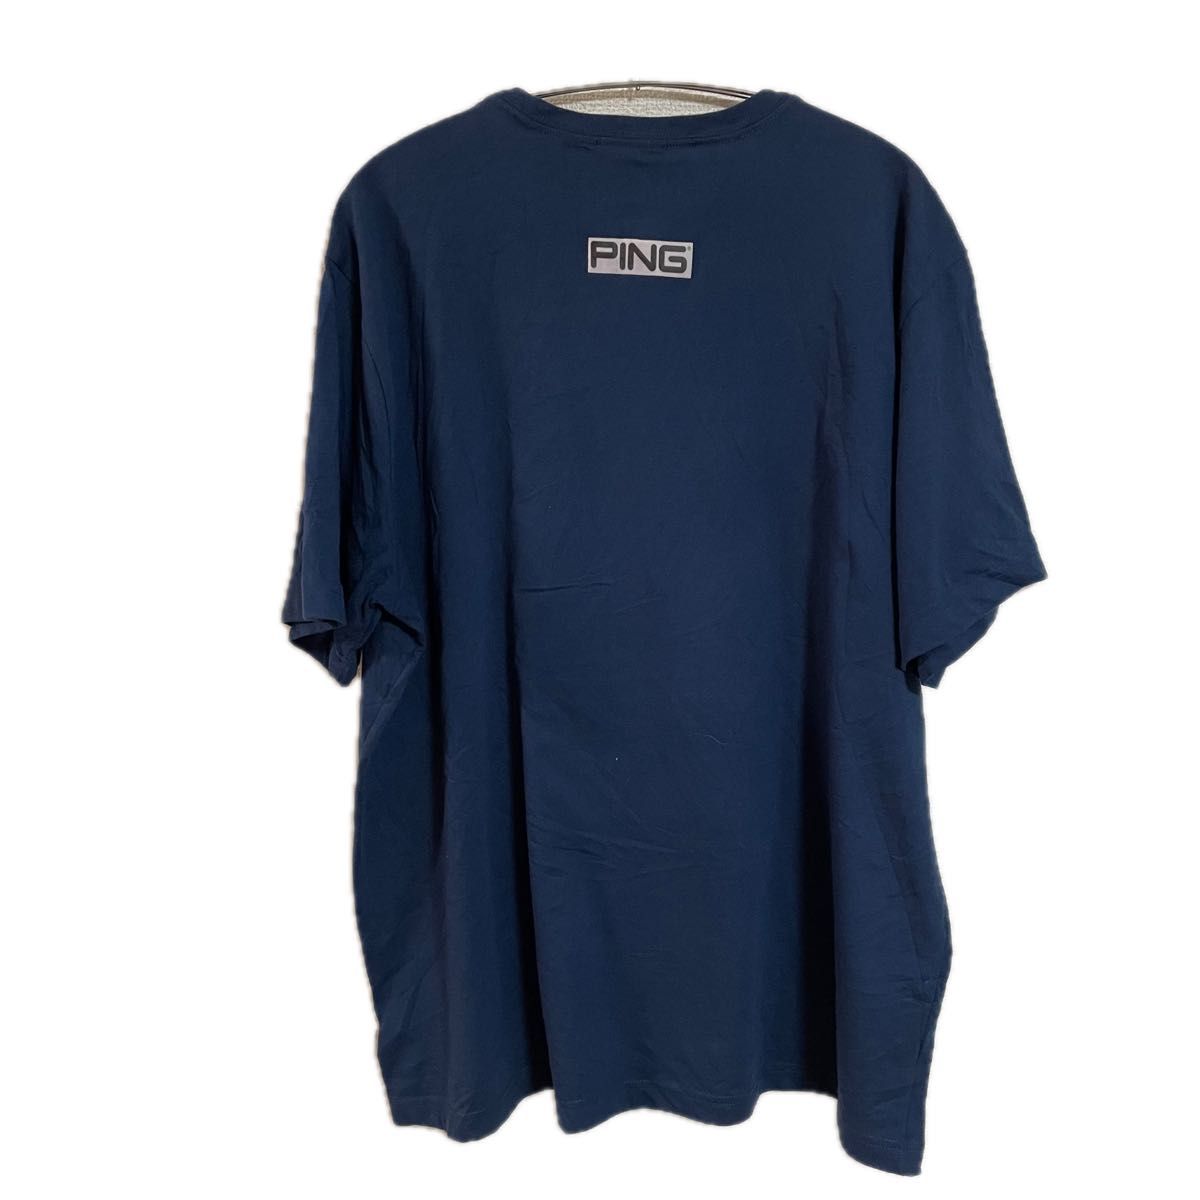 【US古着】ネイビー XL Tシャツ 半袖 レギュラー プリント メンズ レディース 大きいサイズ オーバーサイズ